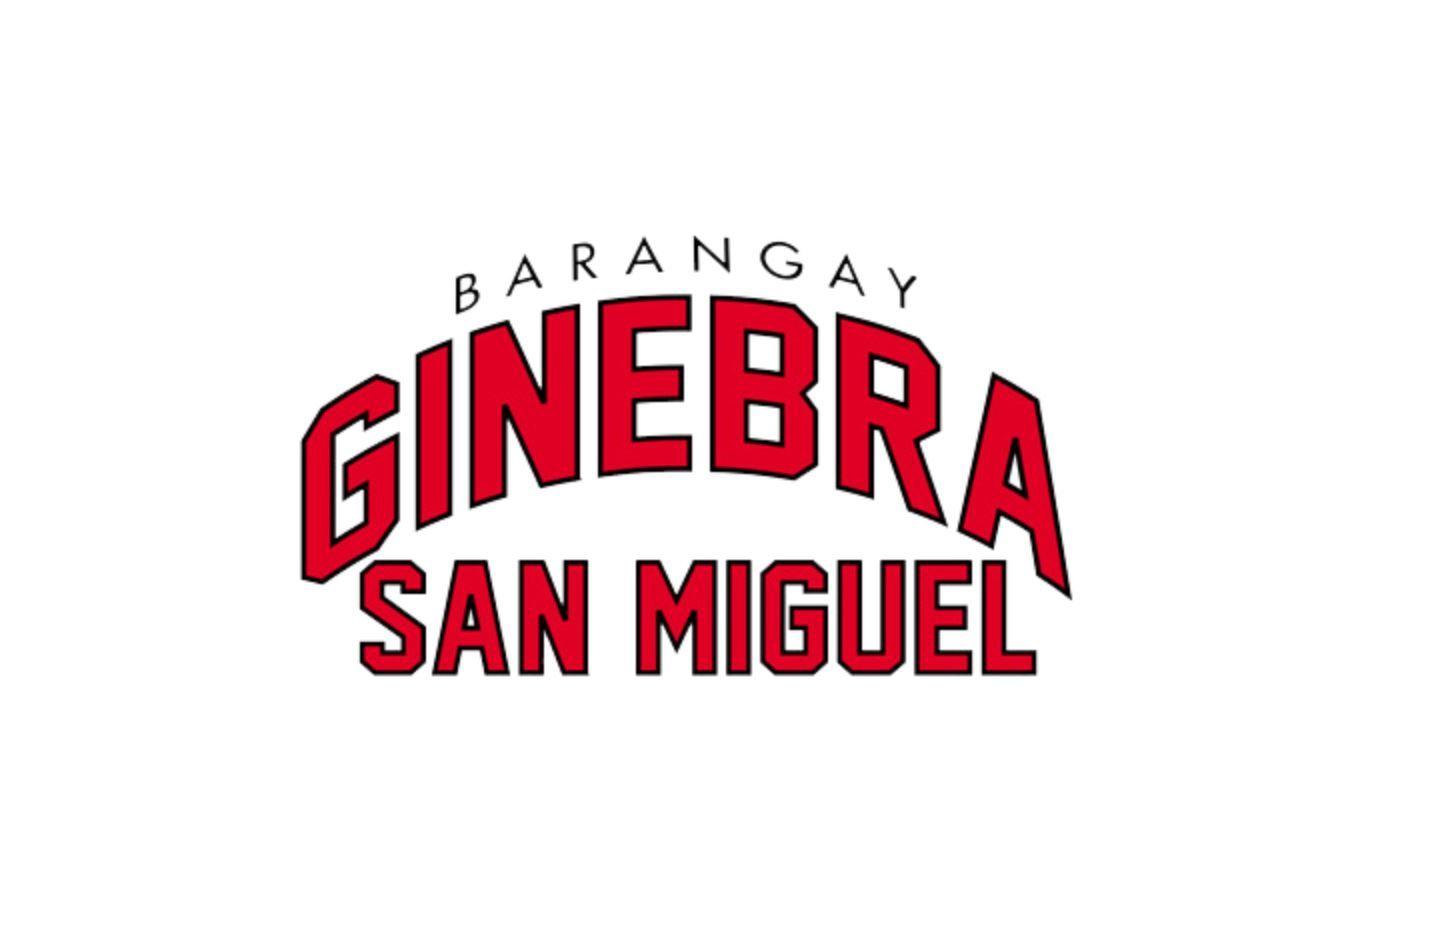 Ginebra Logo - Barangay ginebra logo png 5 PNG Image